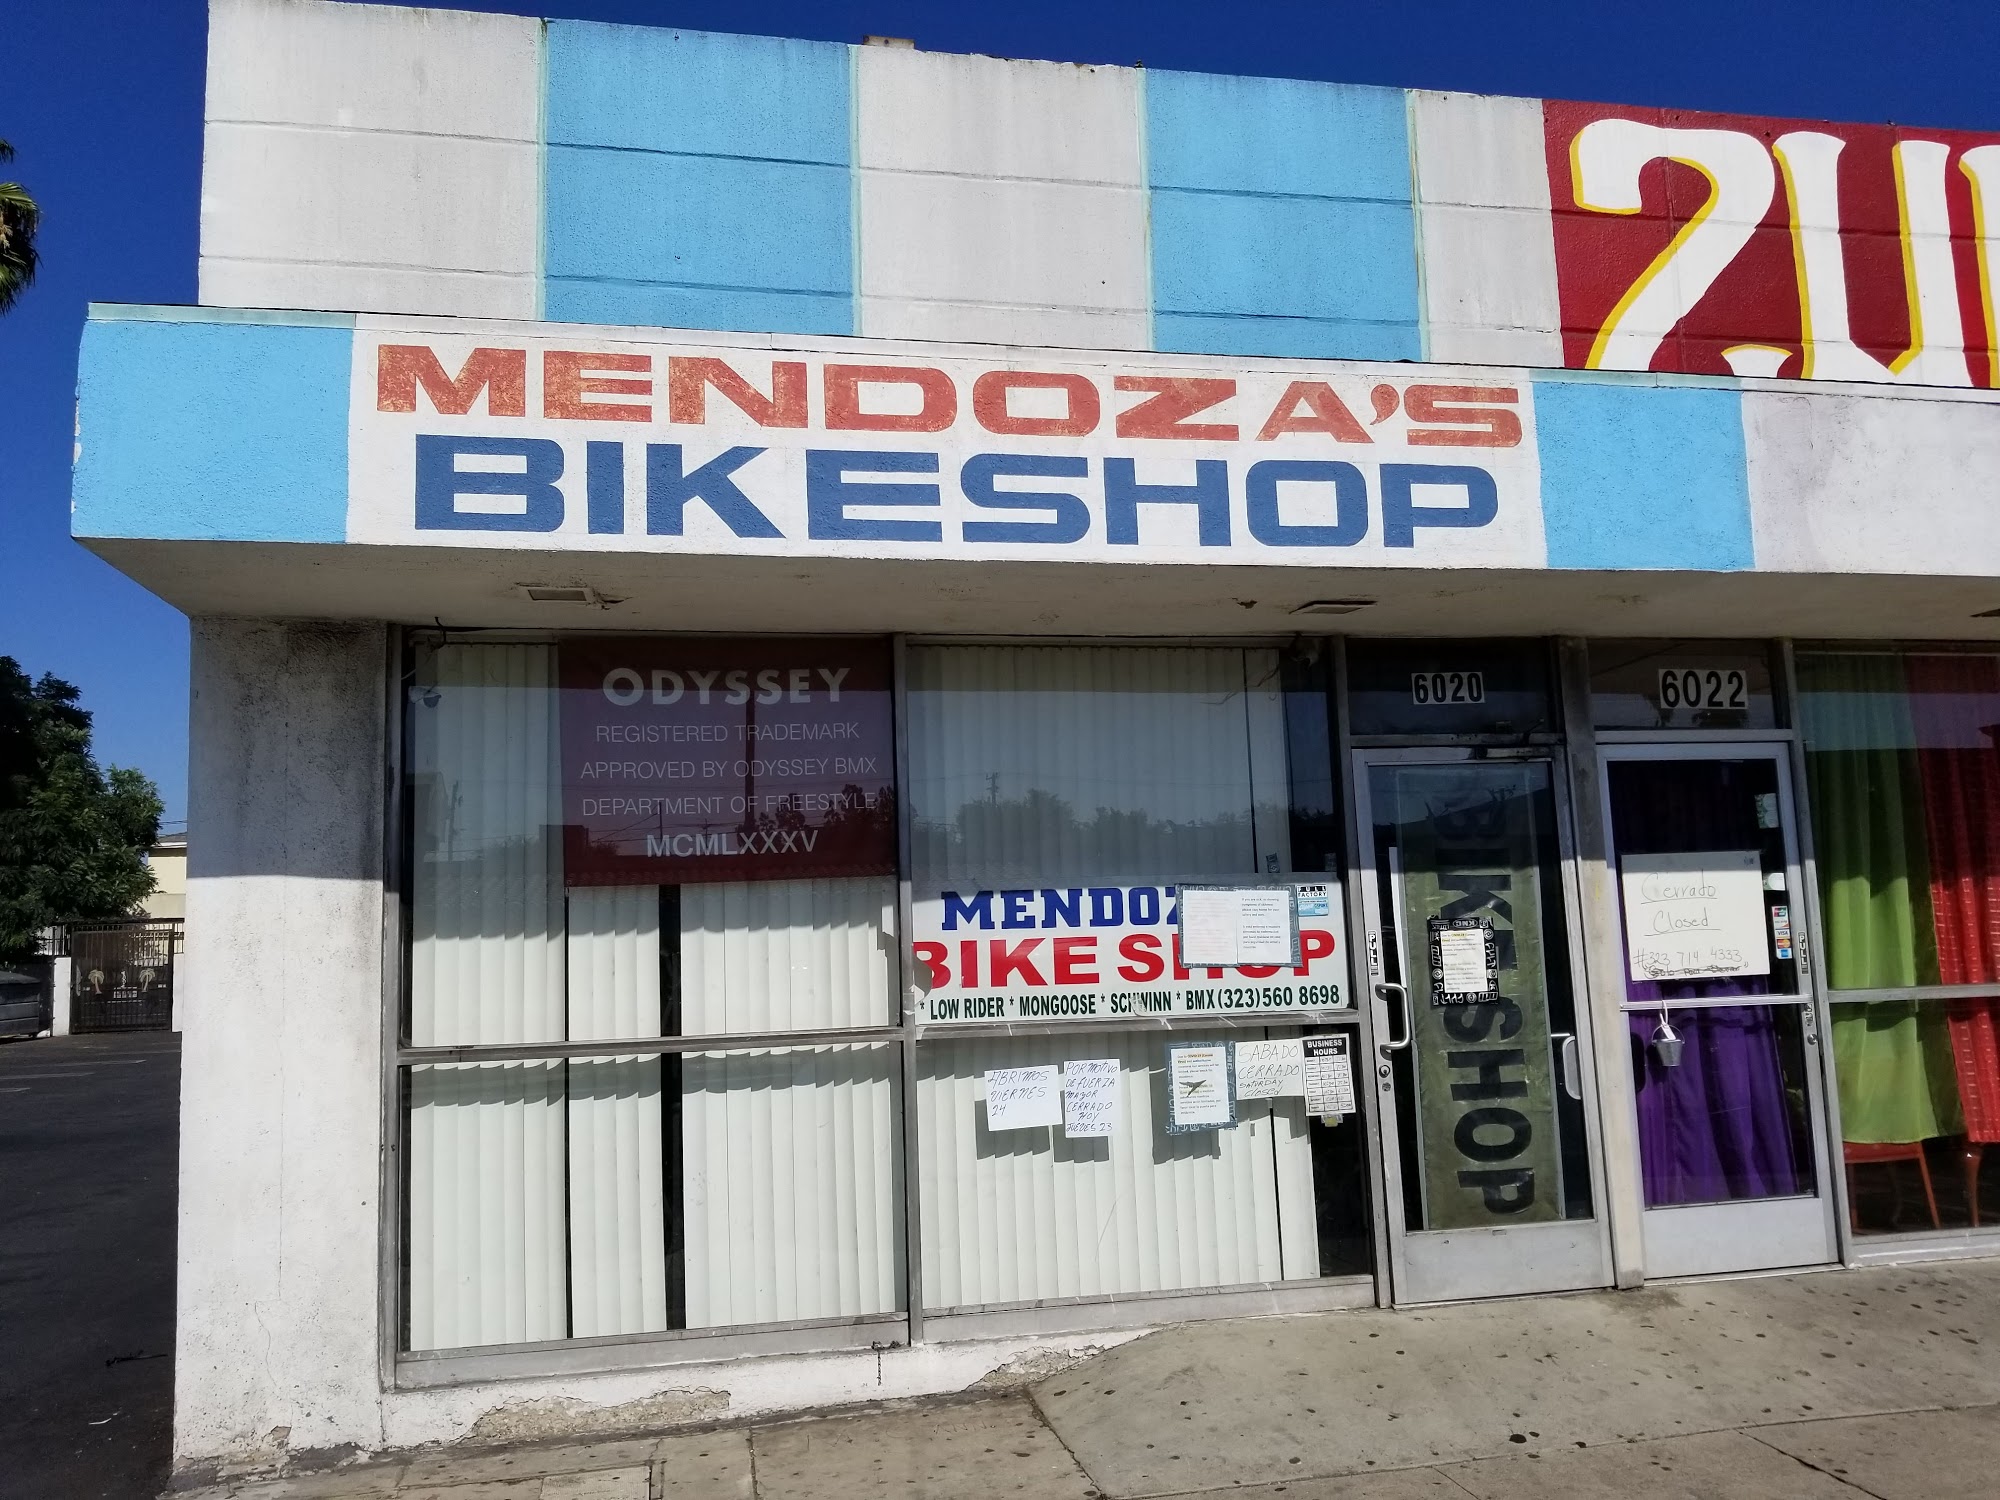 Mendoza's Bike Shop